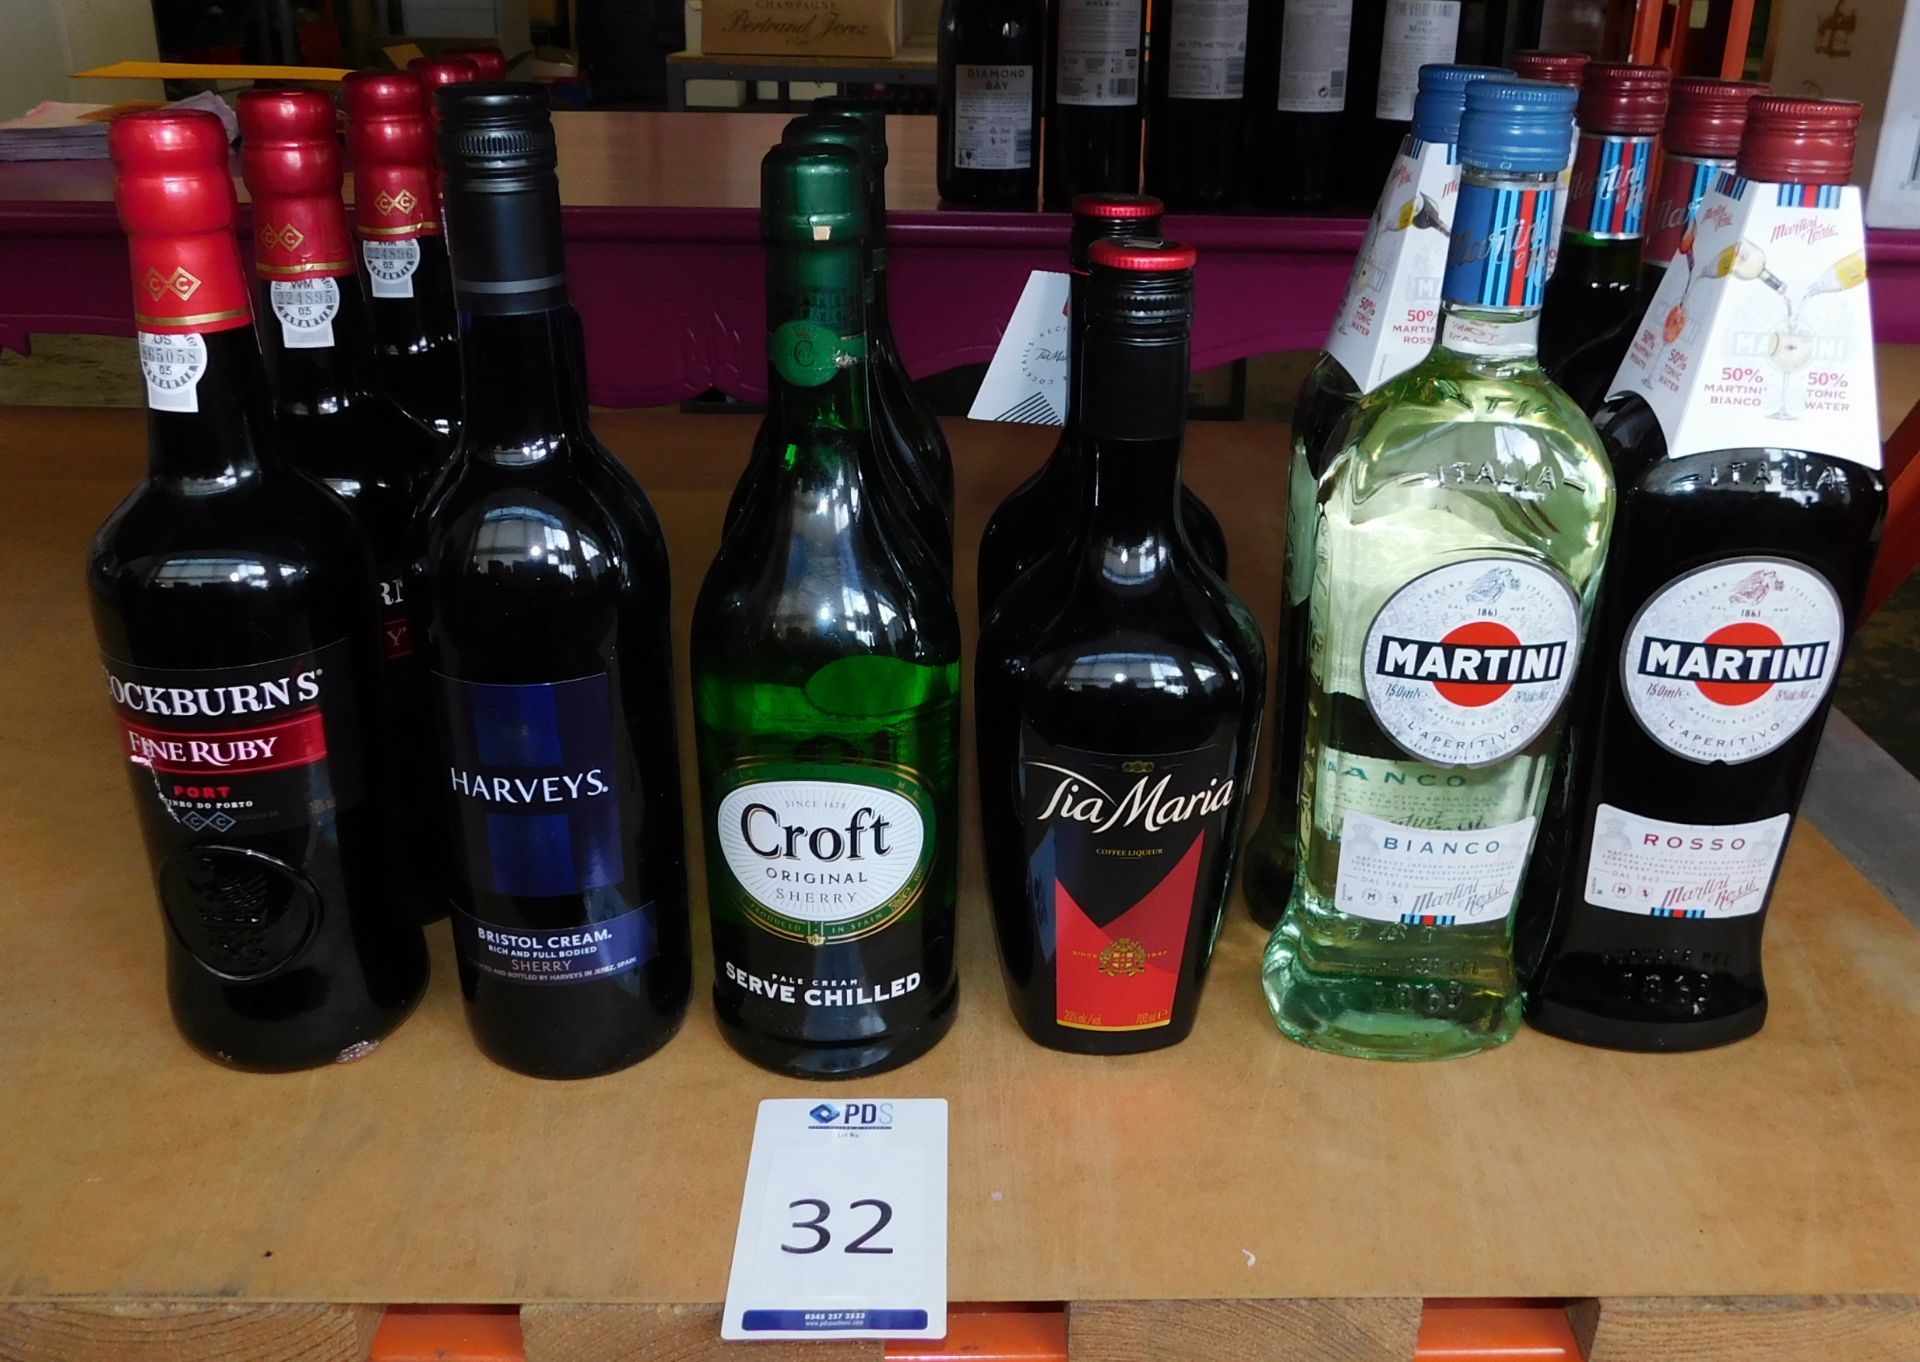 17 Bottles to Include; 4 Martini Rosso, 750ml, 2 Martini Bianco, 750ml, 2 Tia Maria, 700ml, 3